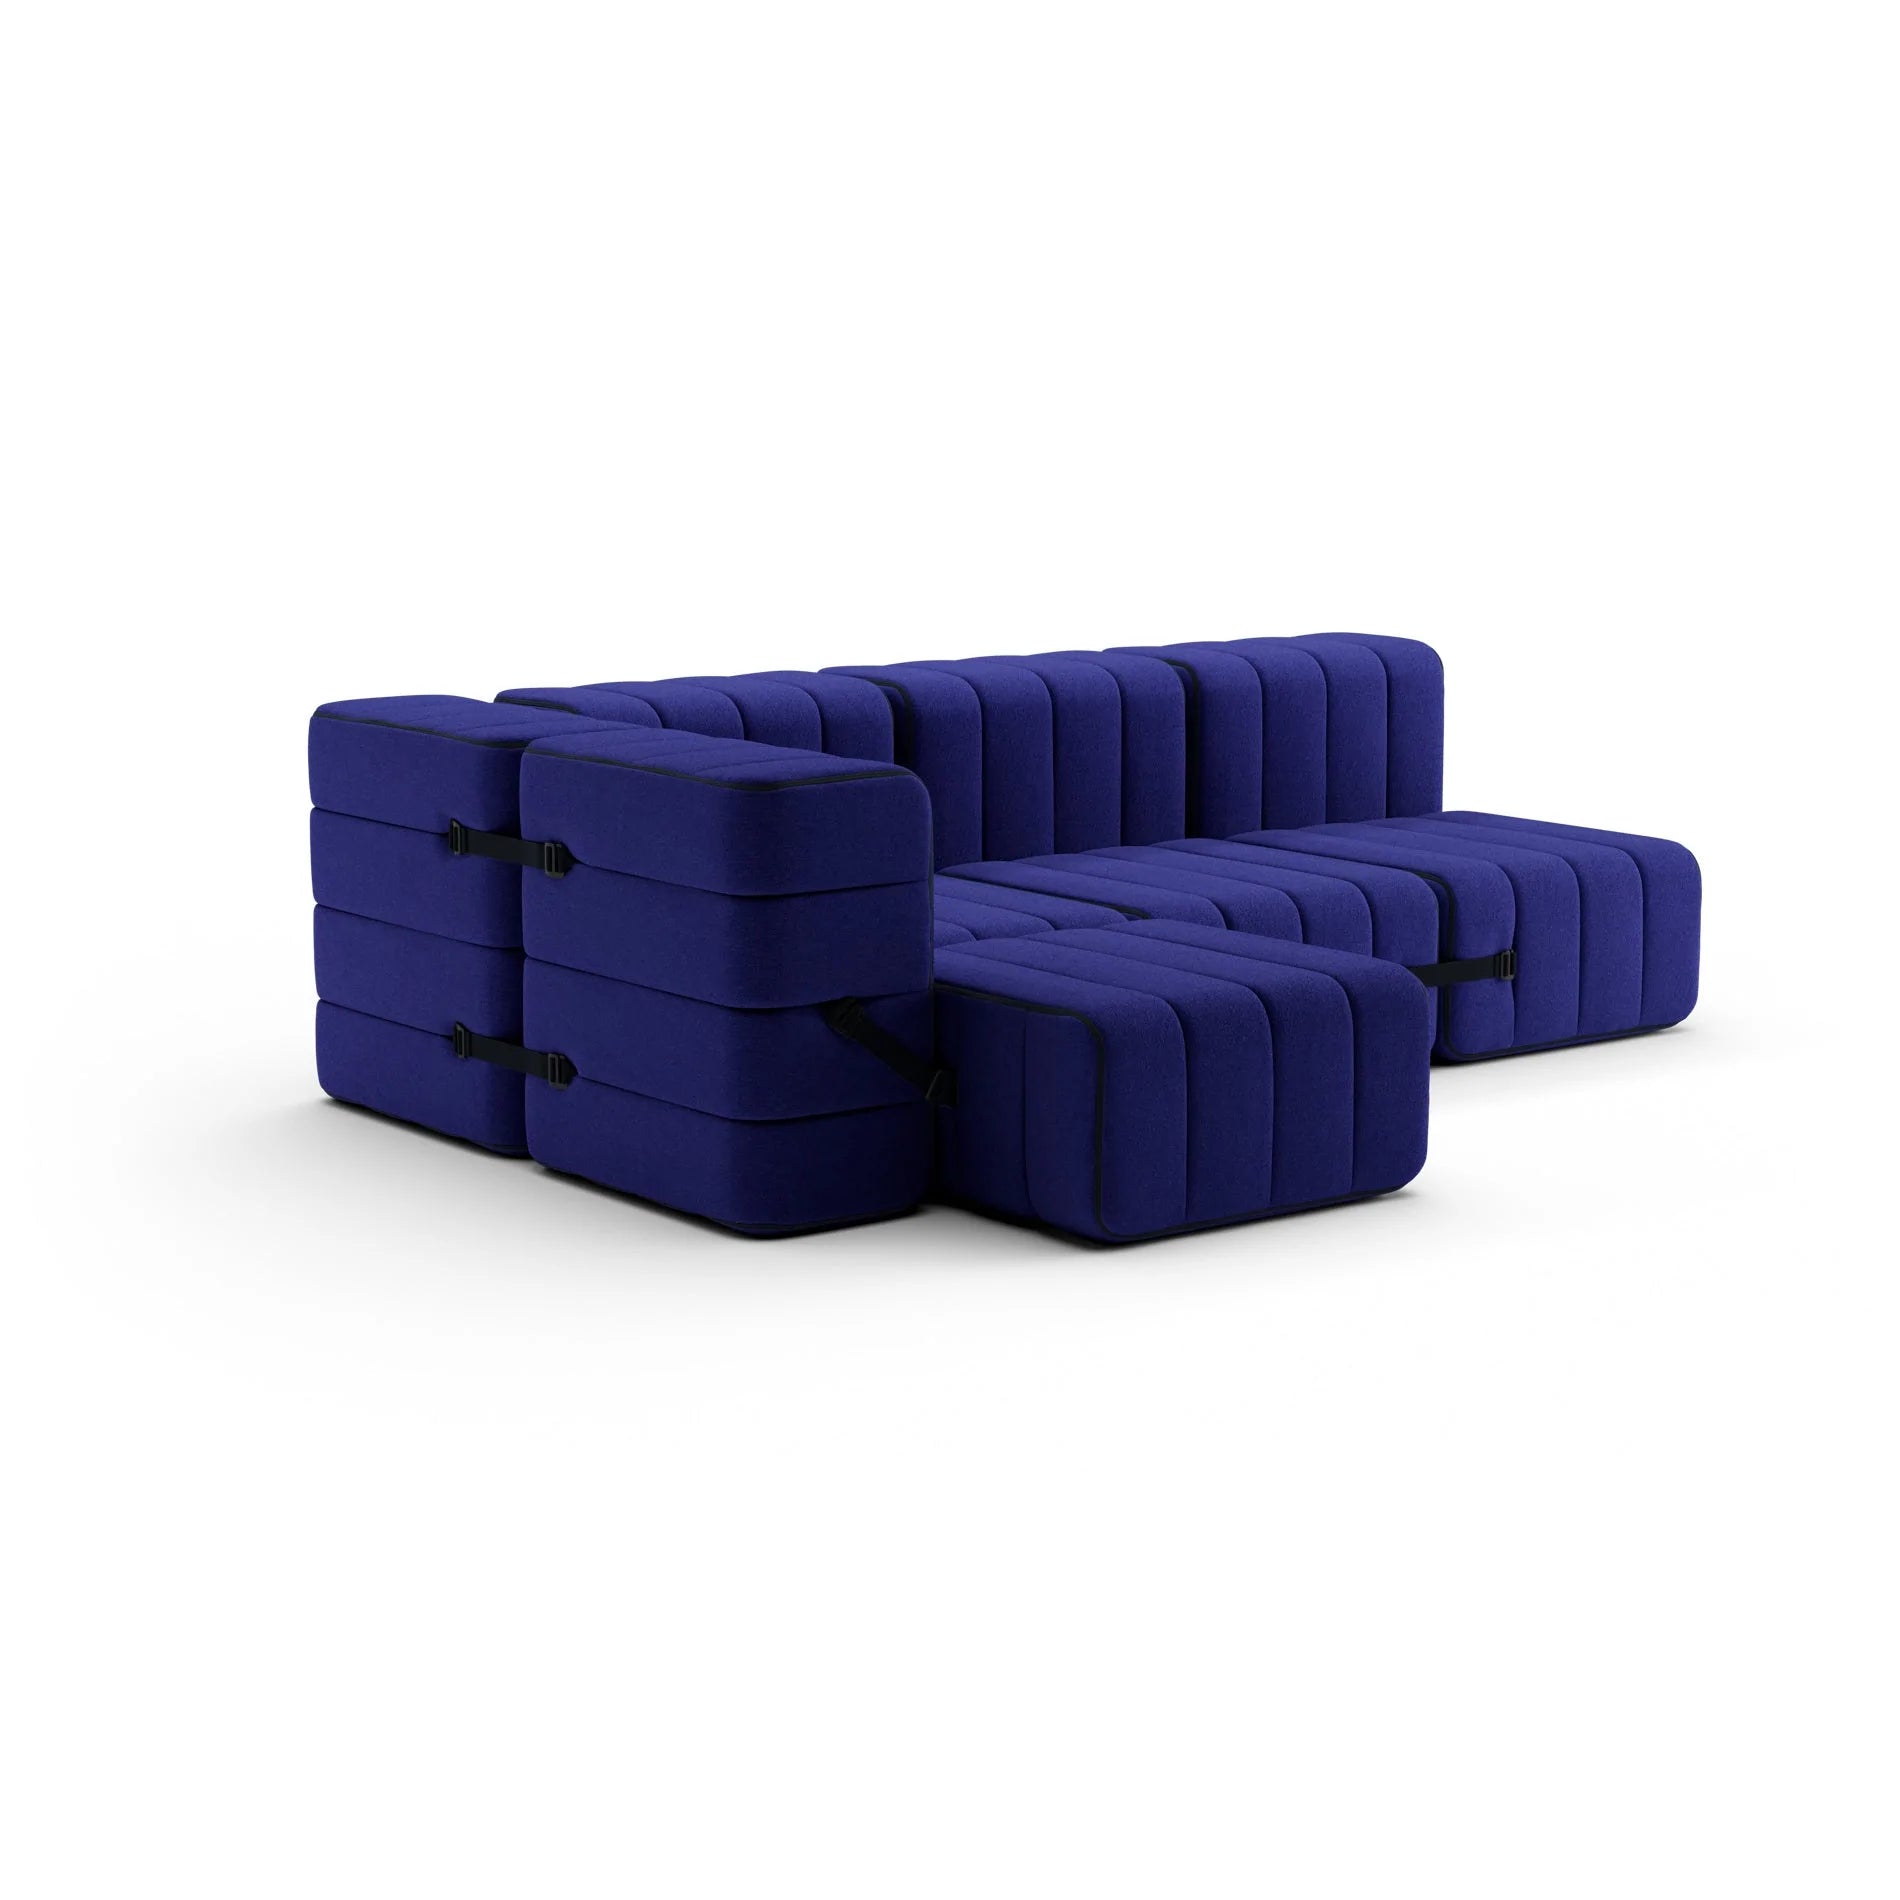 Modular sofa system Curt - Jet Blue Sofas by Ambivalenz